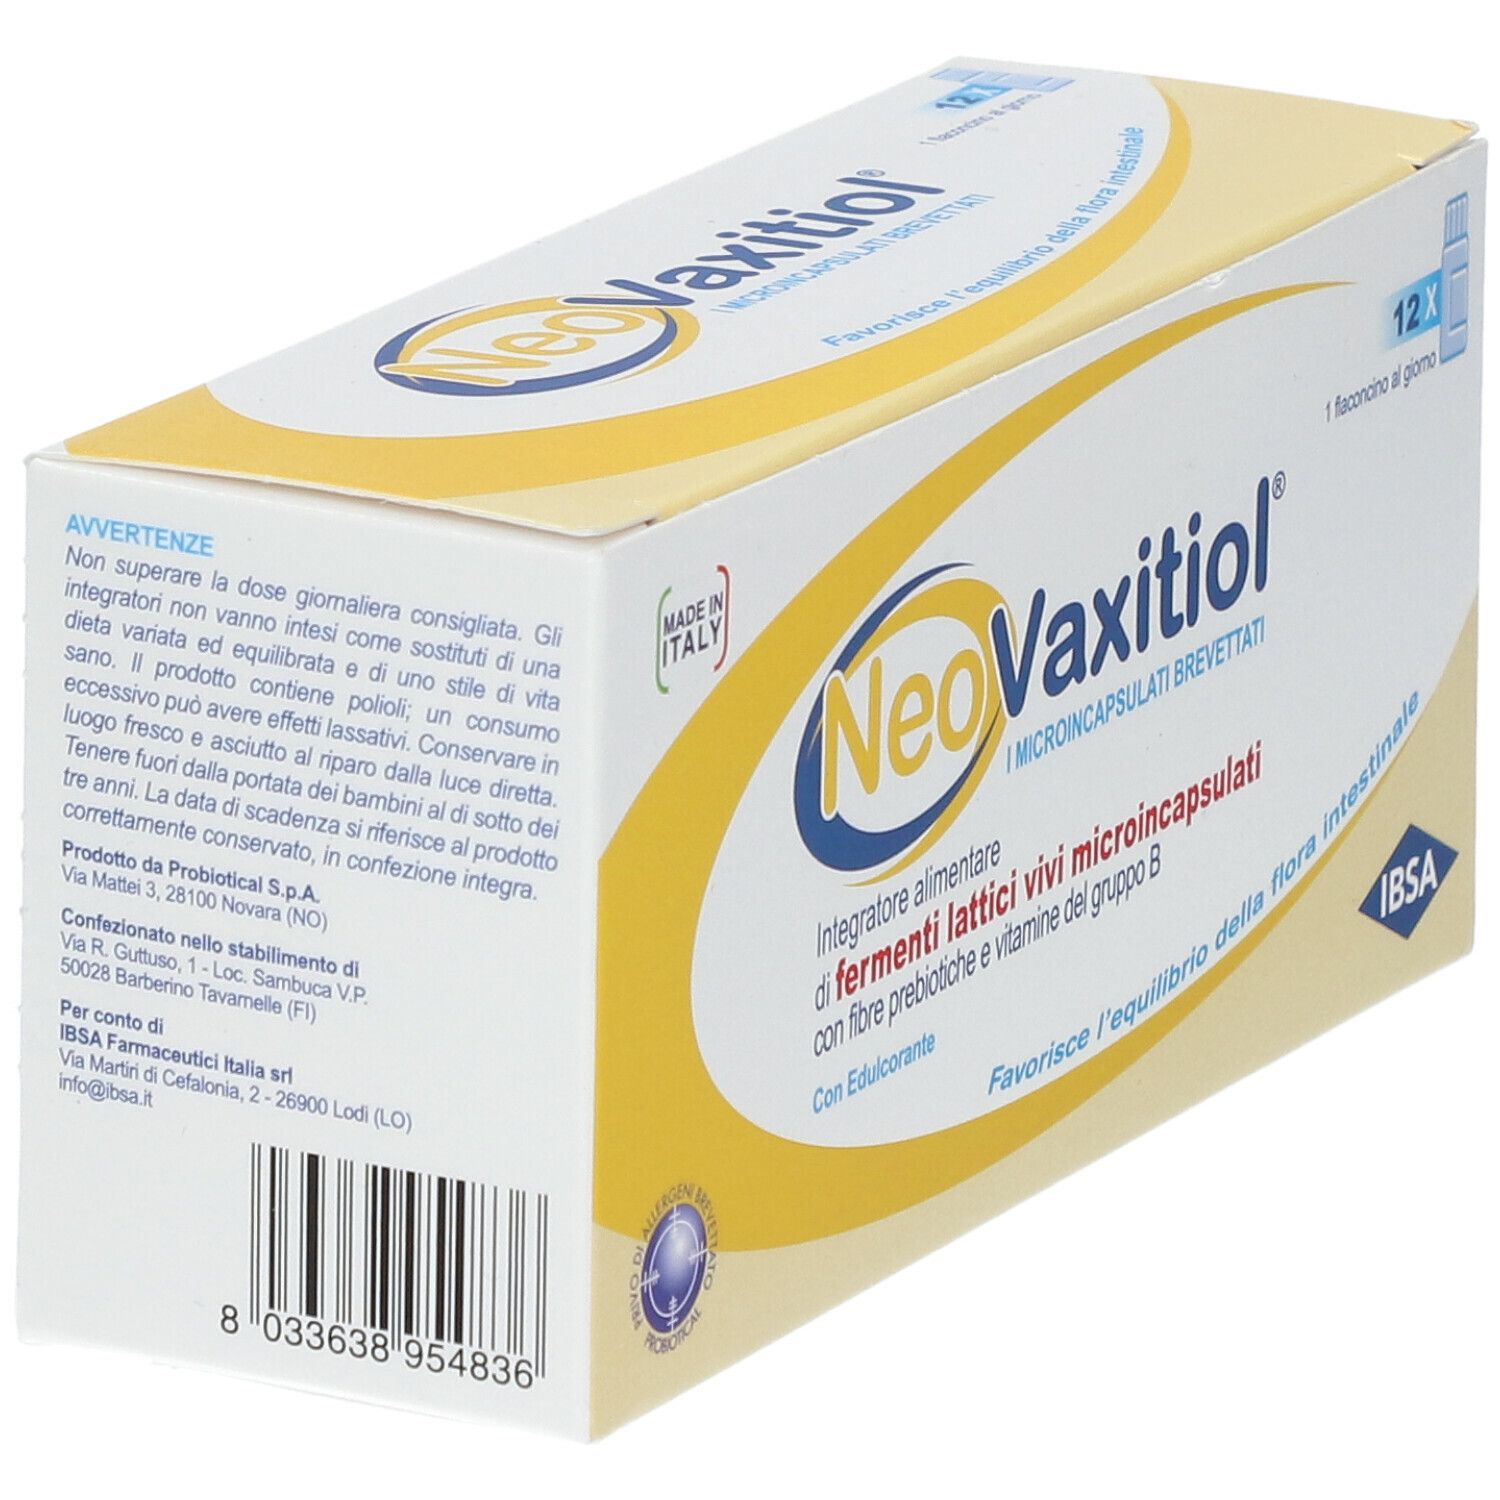 NeoVaxitiol® Flaconcini Bevibili